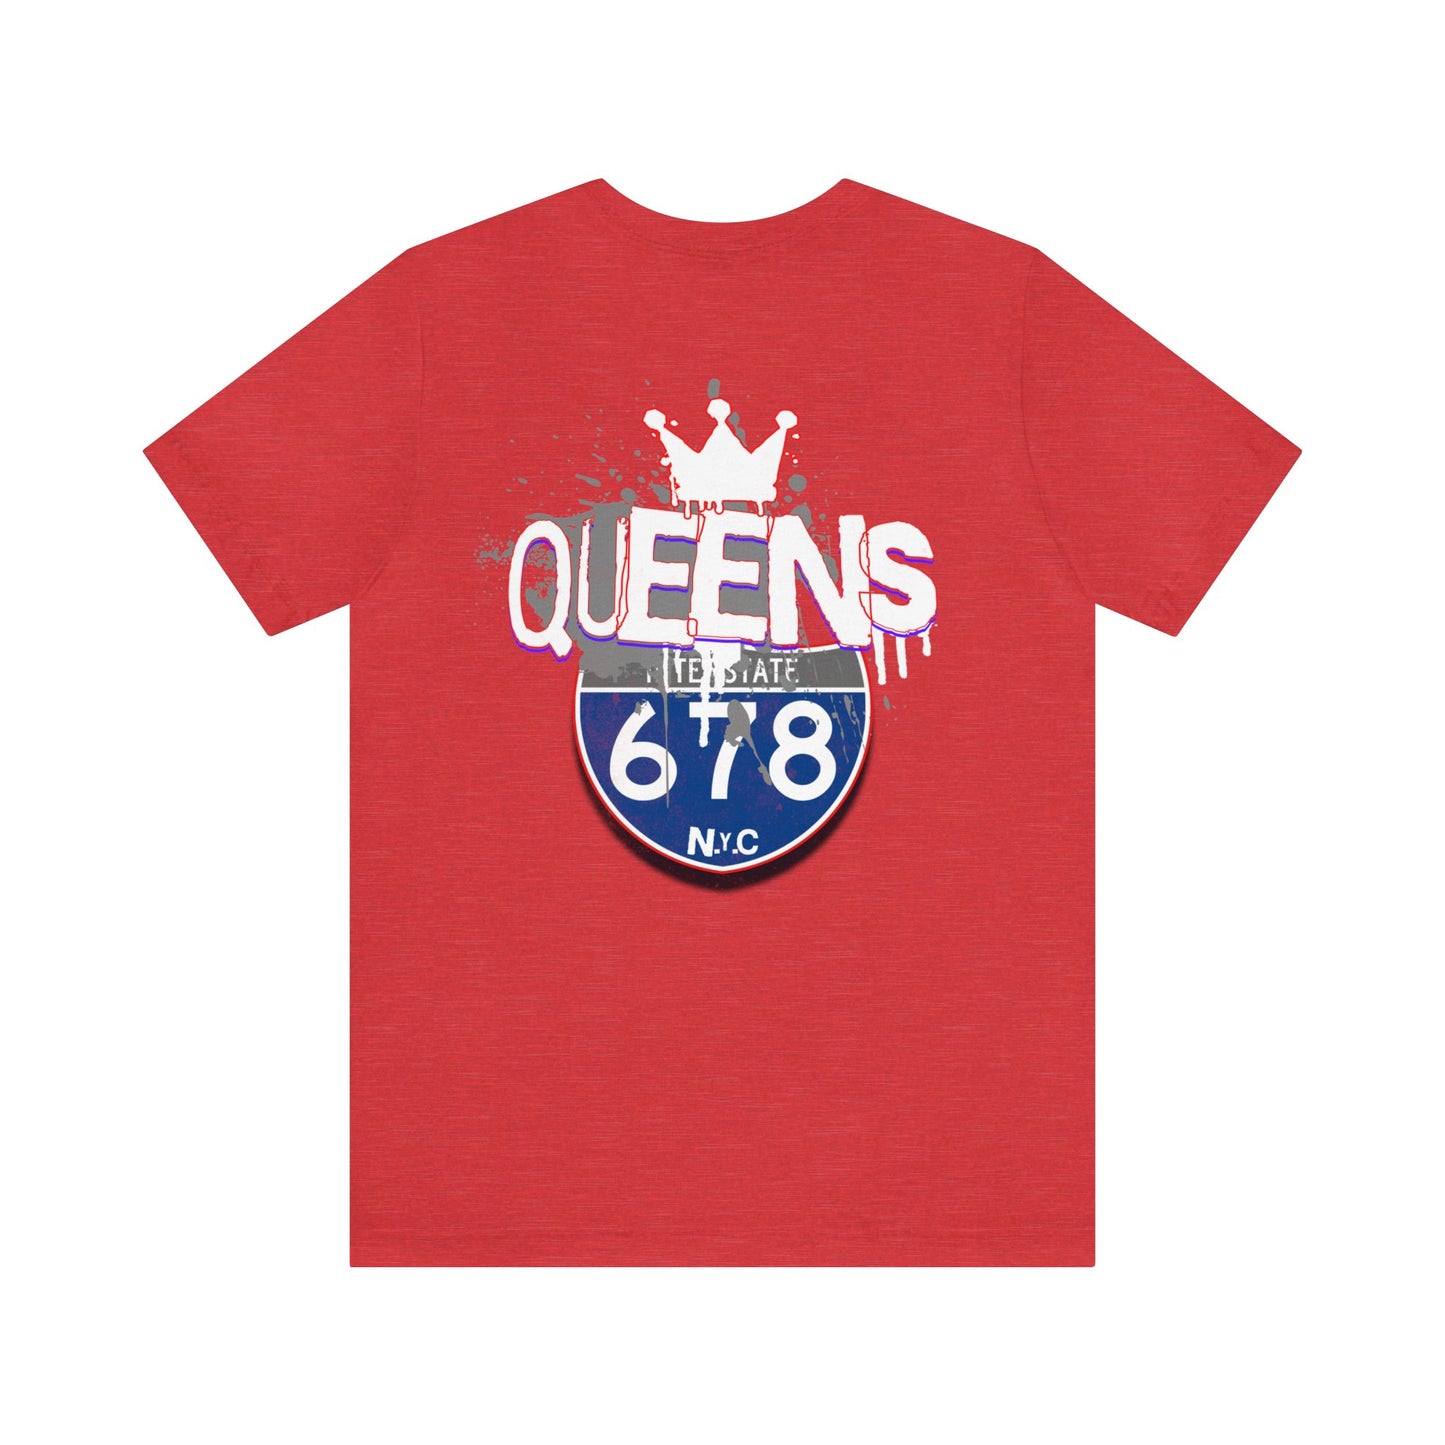 i-678, queens, ny, Unisex Jersey Short Sleeve Tee